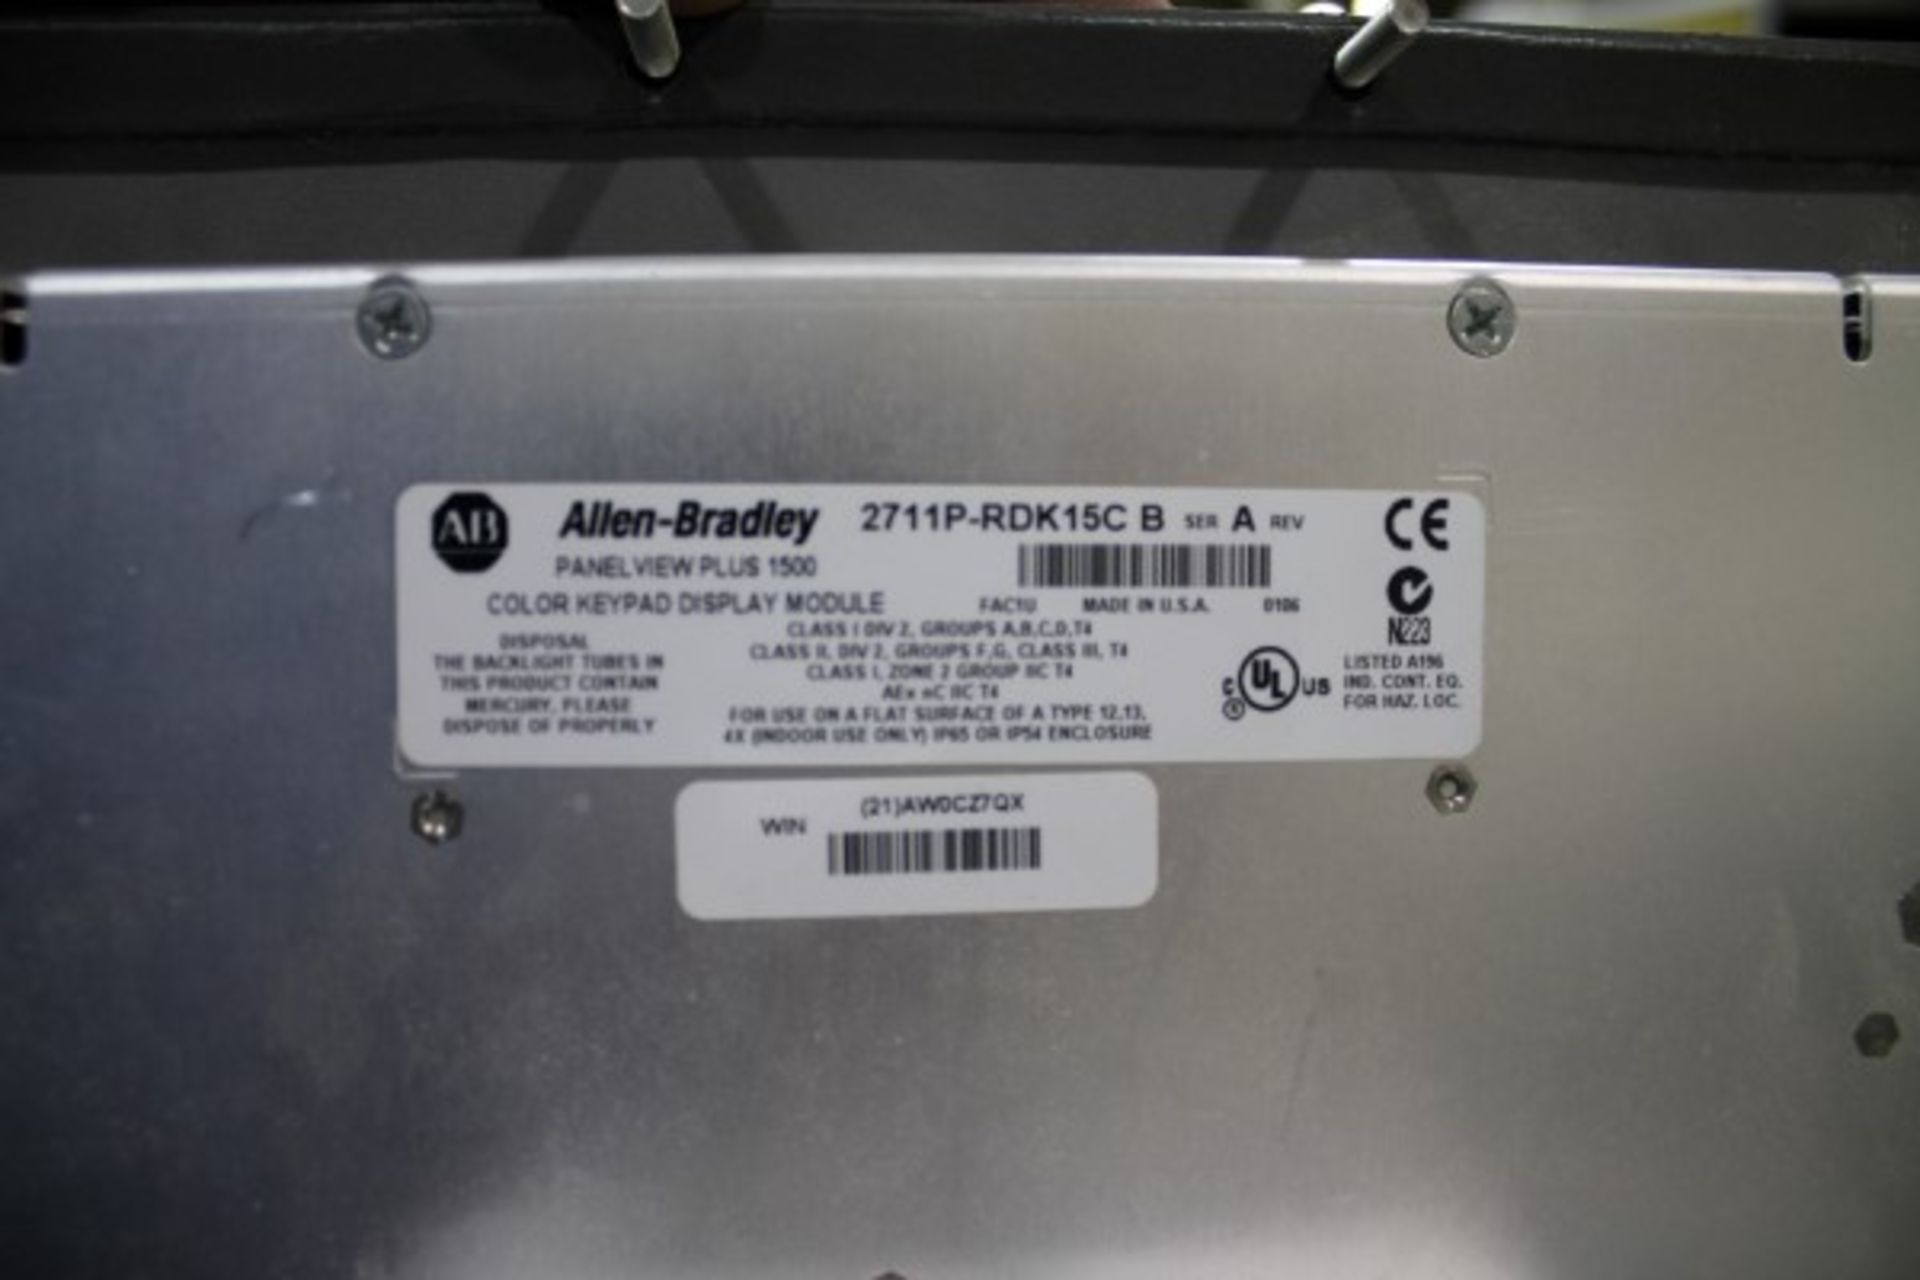 Allen-Bradley Panel View Plus 1500 Display Module - Image 2 of 2